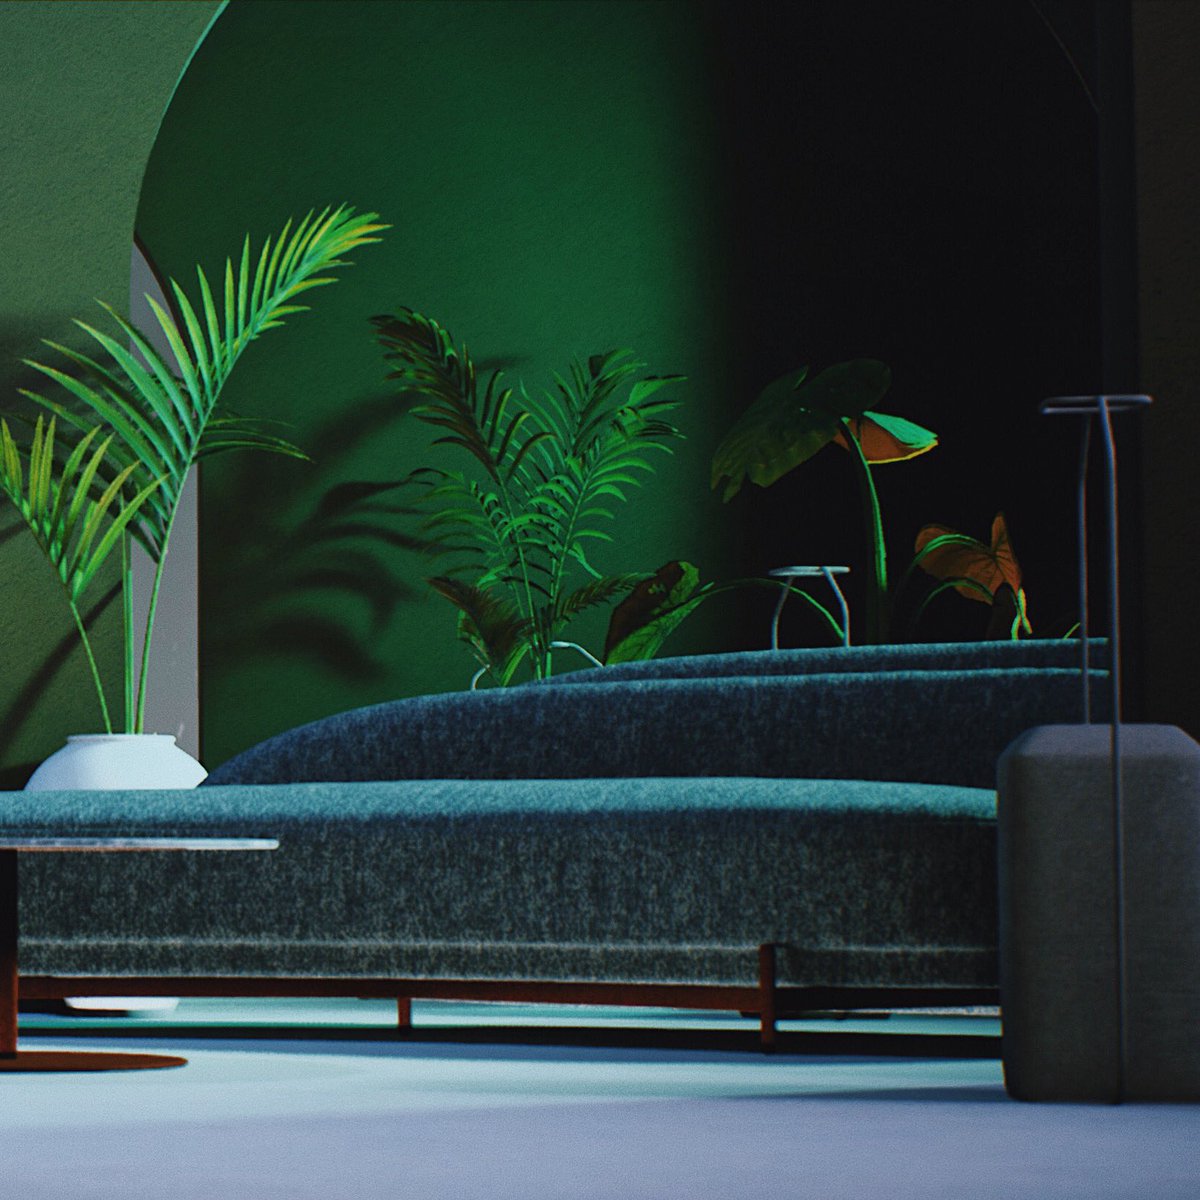 Monocromáa
Green has never been my favorite color, until now
.
.
.
.
#minimal #3d #render #archviz #interiordesign #archmodel #passion4interior #madewithunreal #ue4